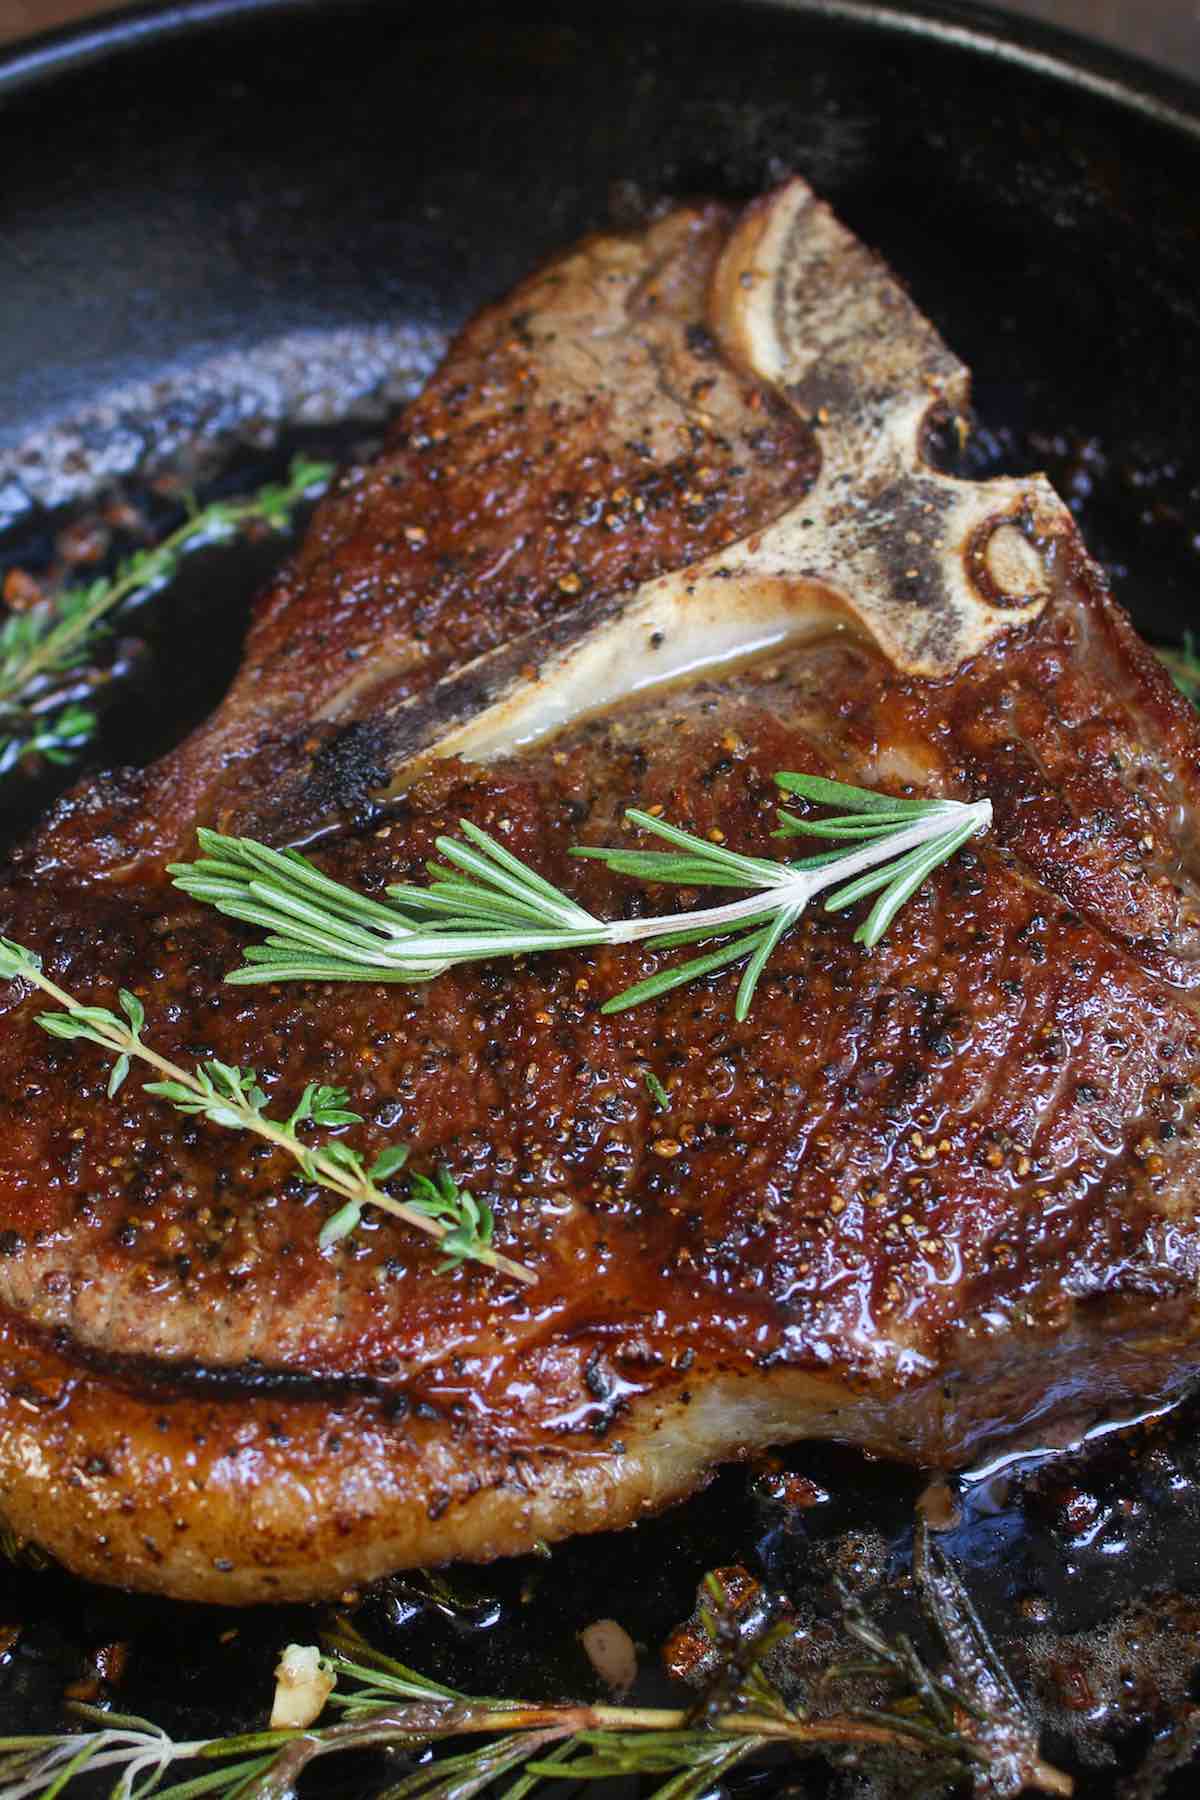 Perfectly seared T-bone steak in a cast iron skillet